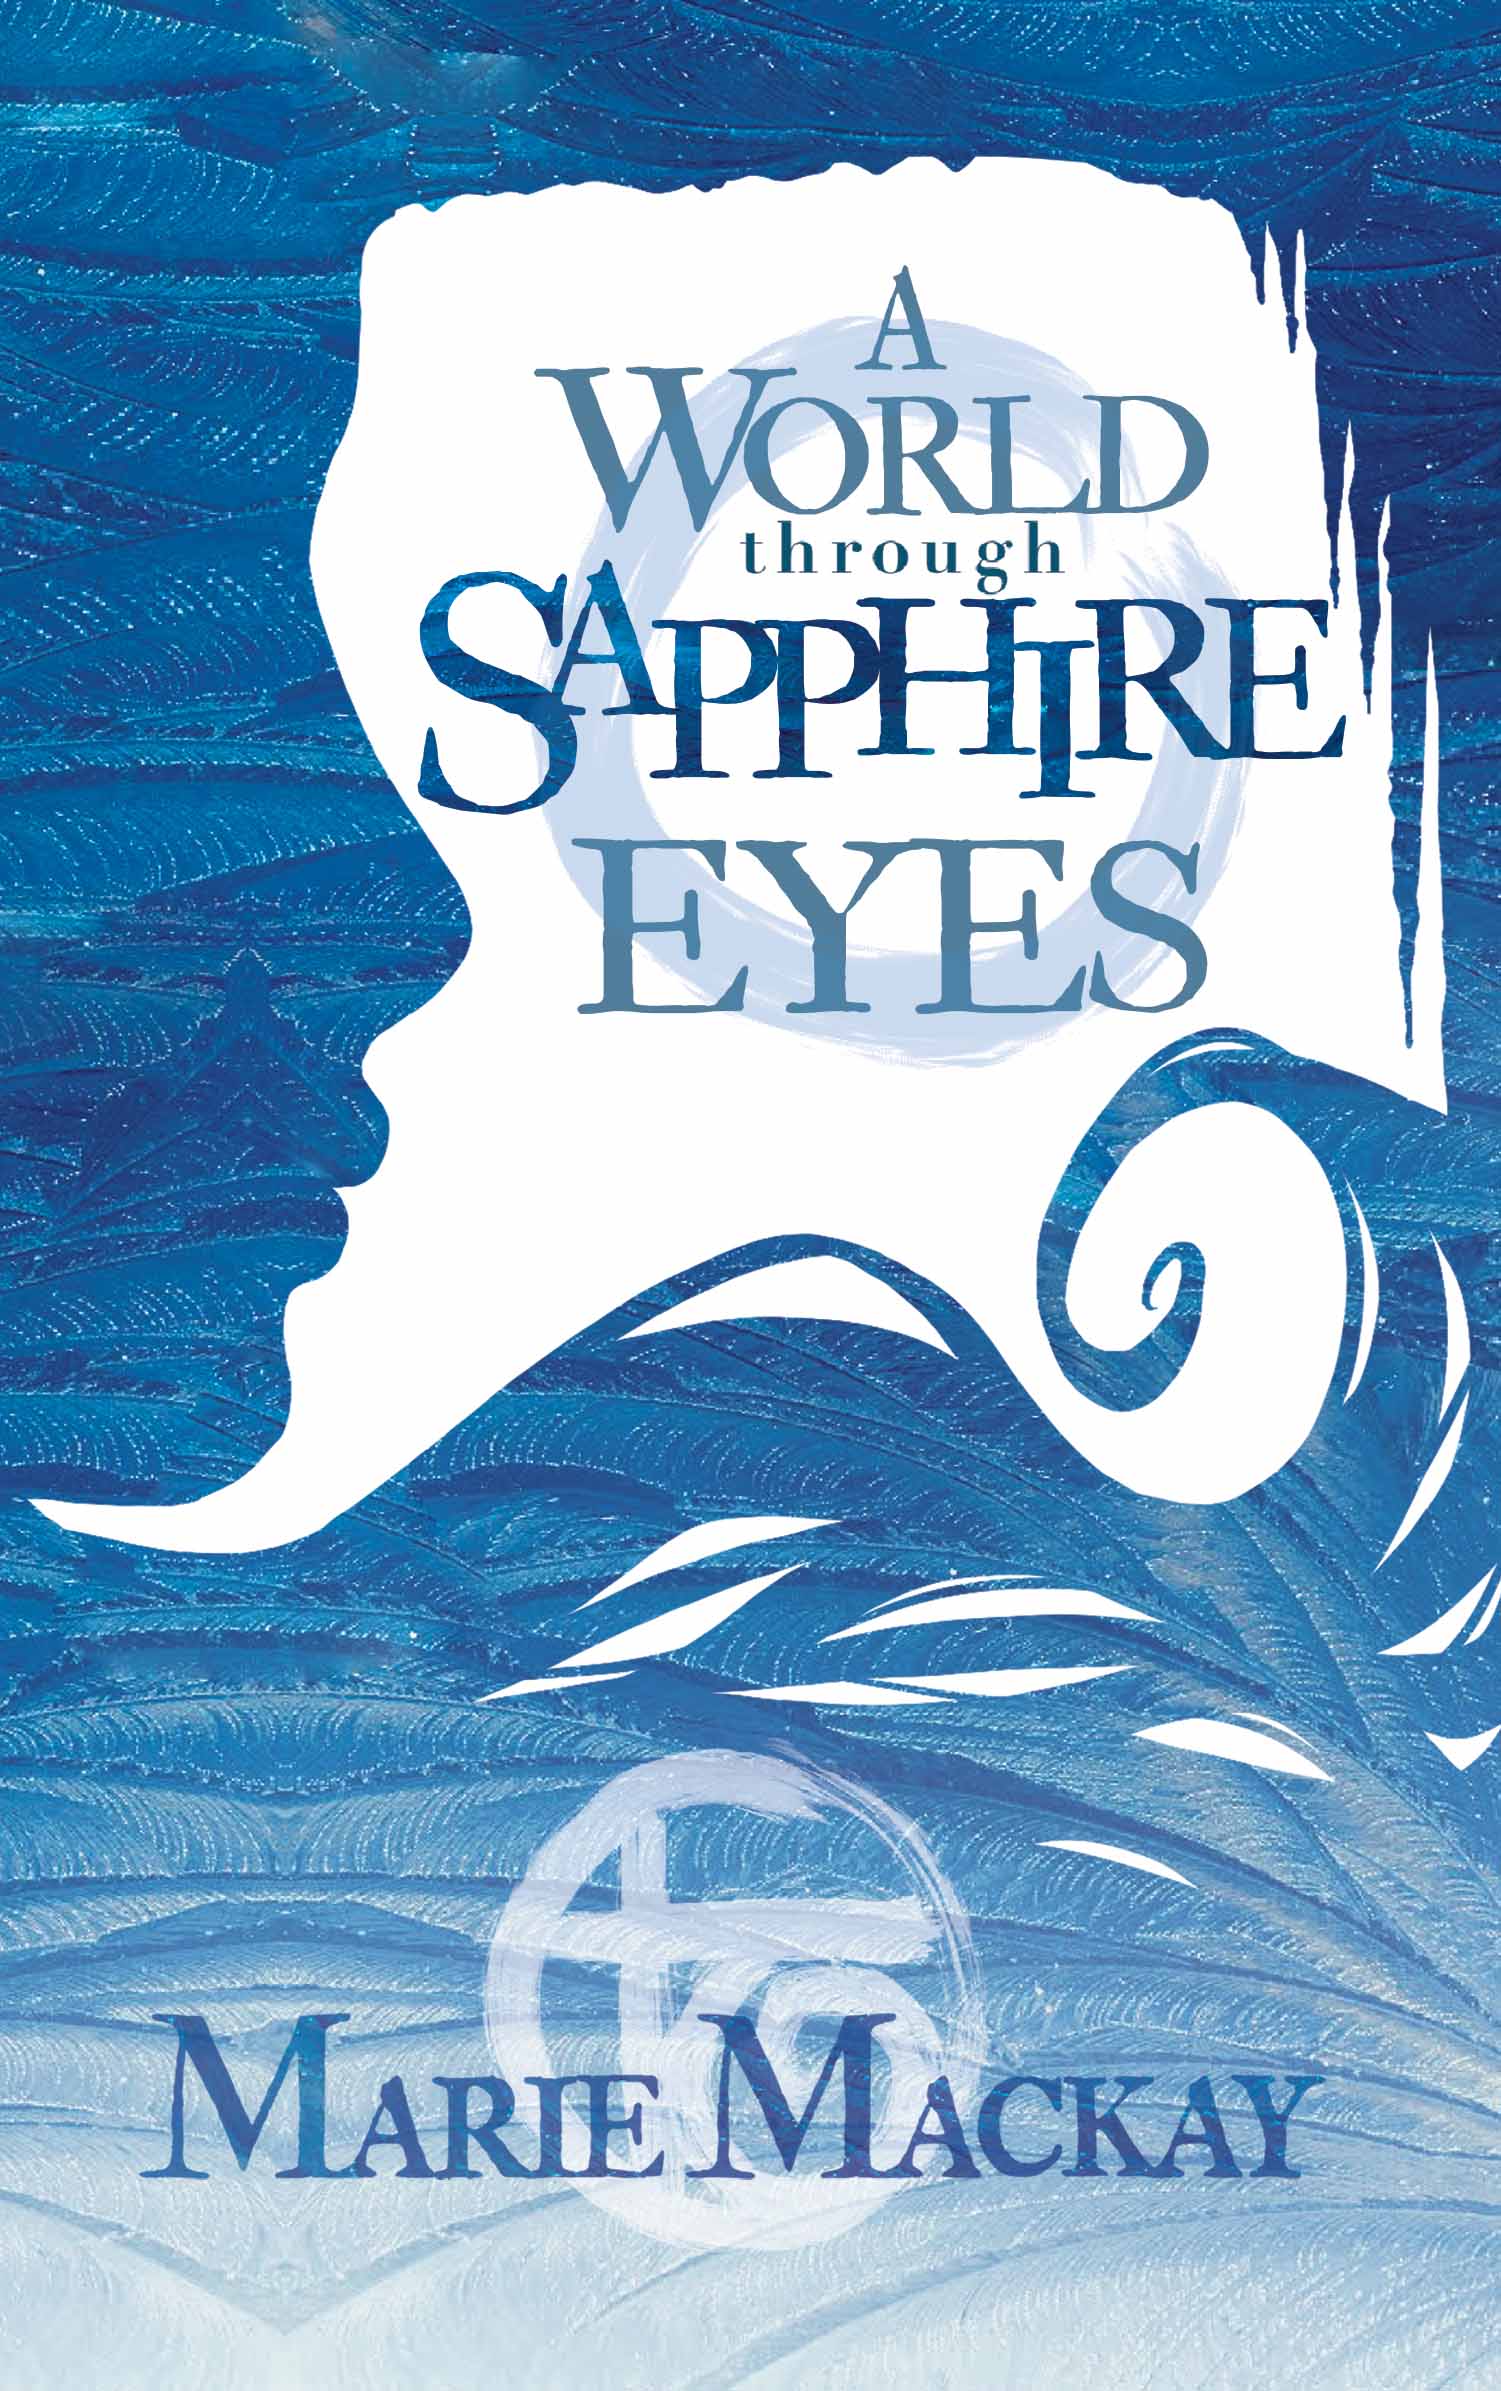 FREE: A World Through Sapphire Eyes by Marie Mackay